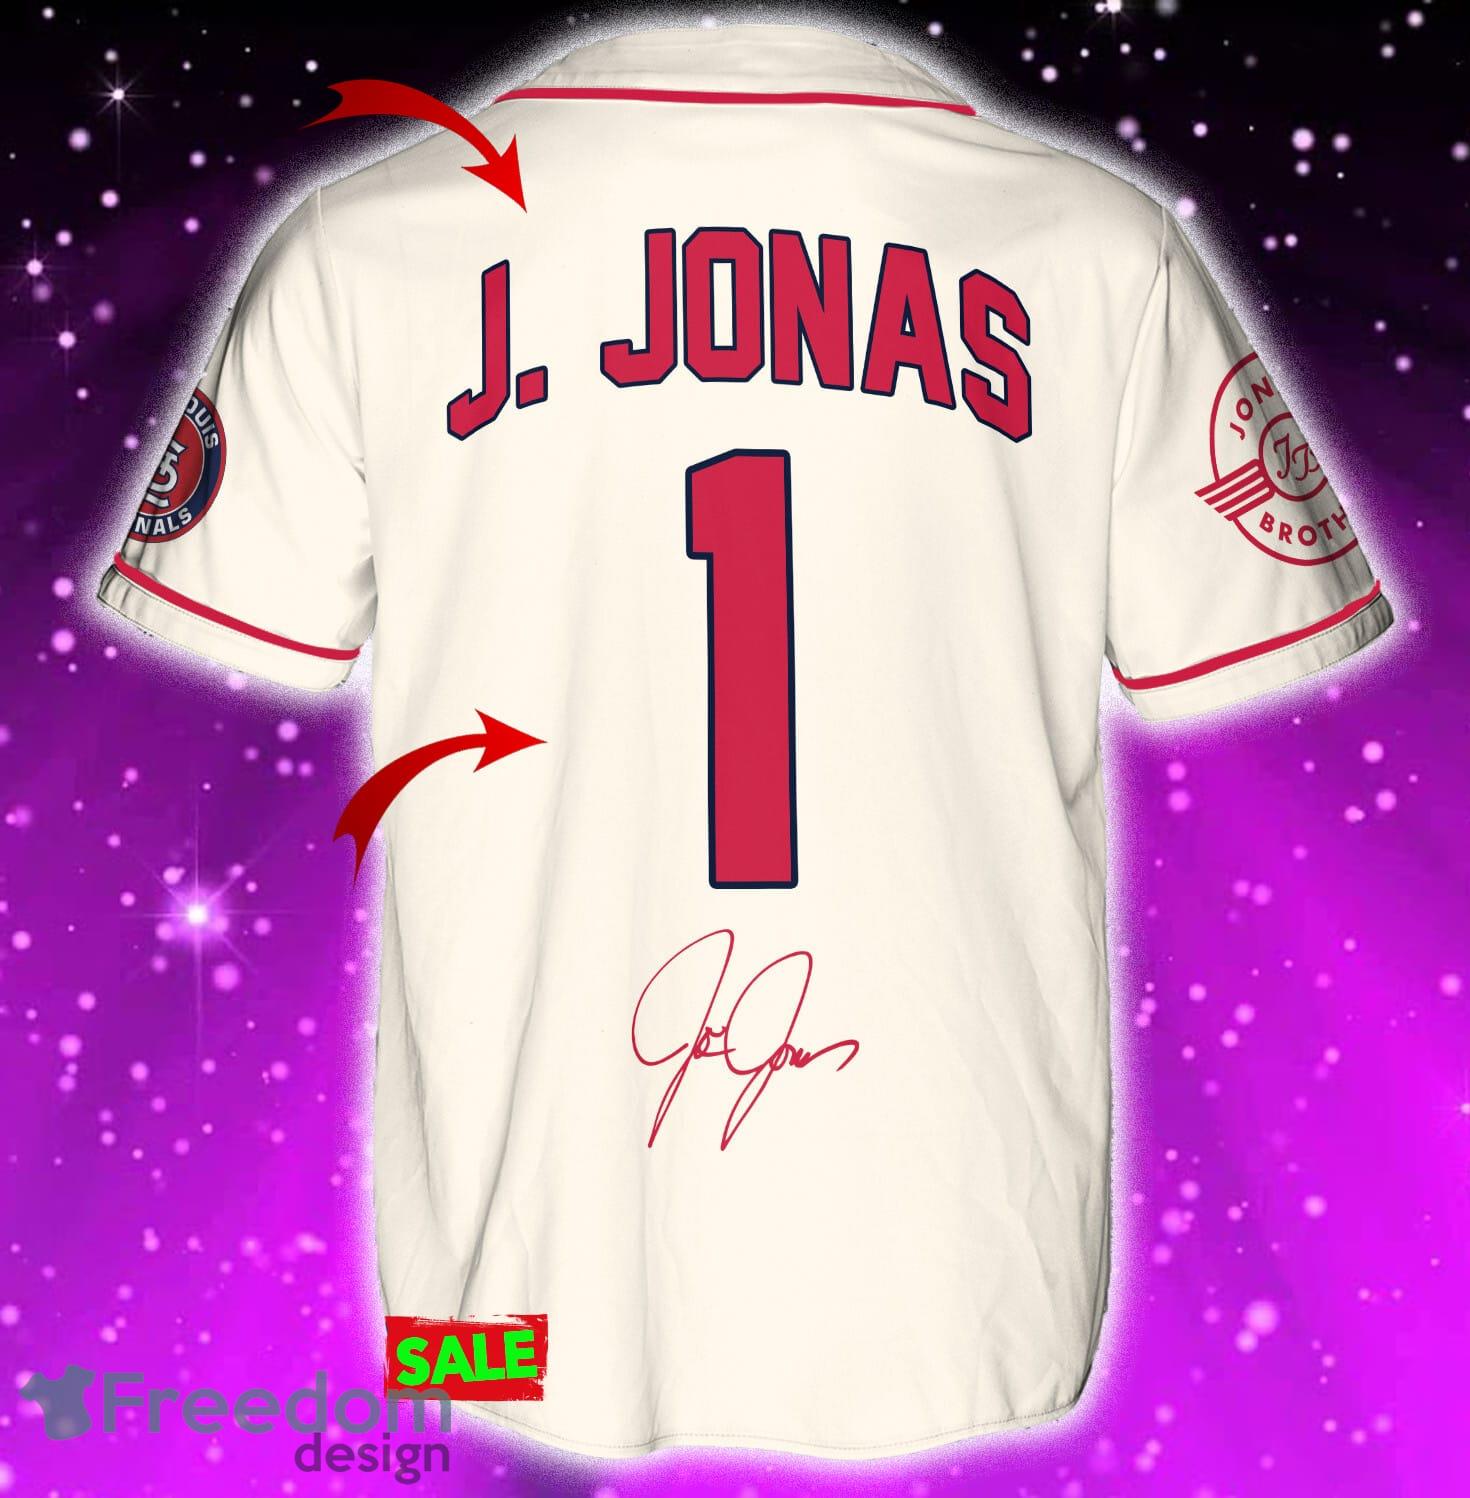 St.Louis Cardinals J. Jonas Jersey Baseball Shirt Cream Custom Number And  Name - Freedomdesign